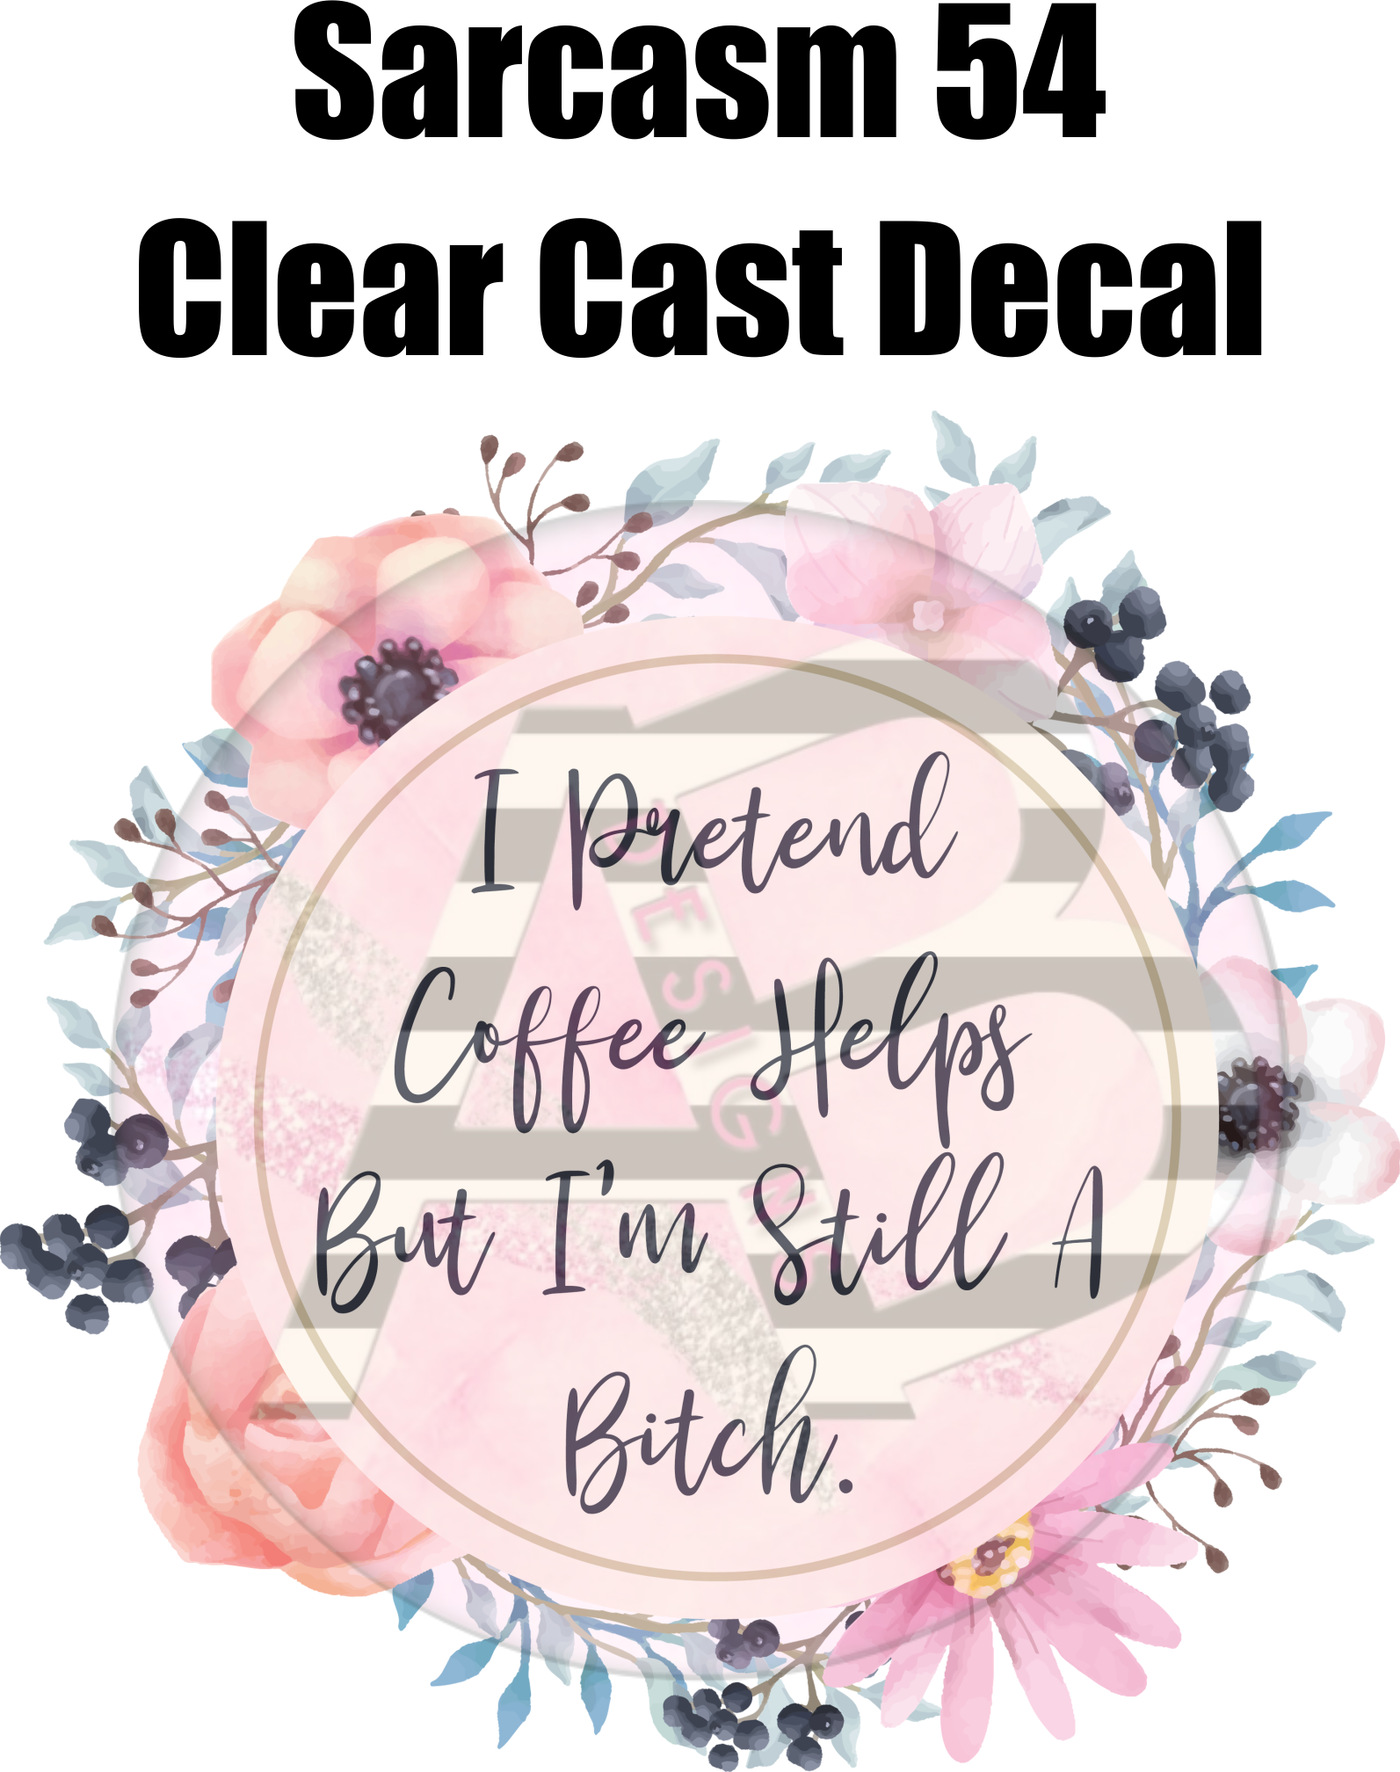 Sarcasm 54 - Clear Cast Decal